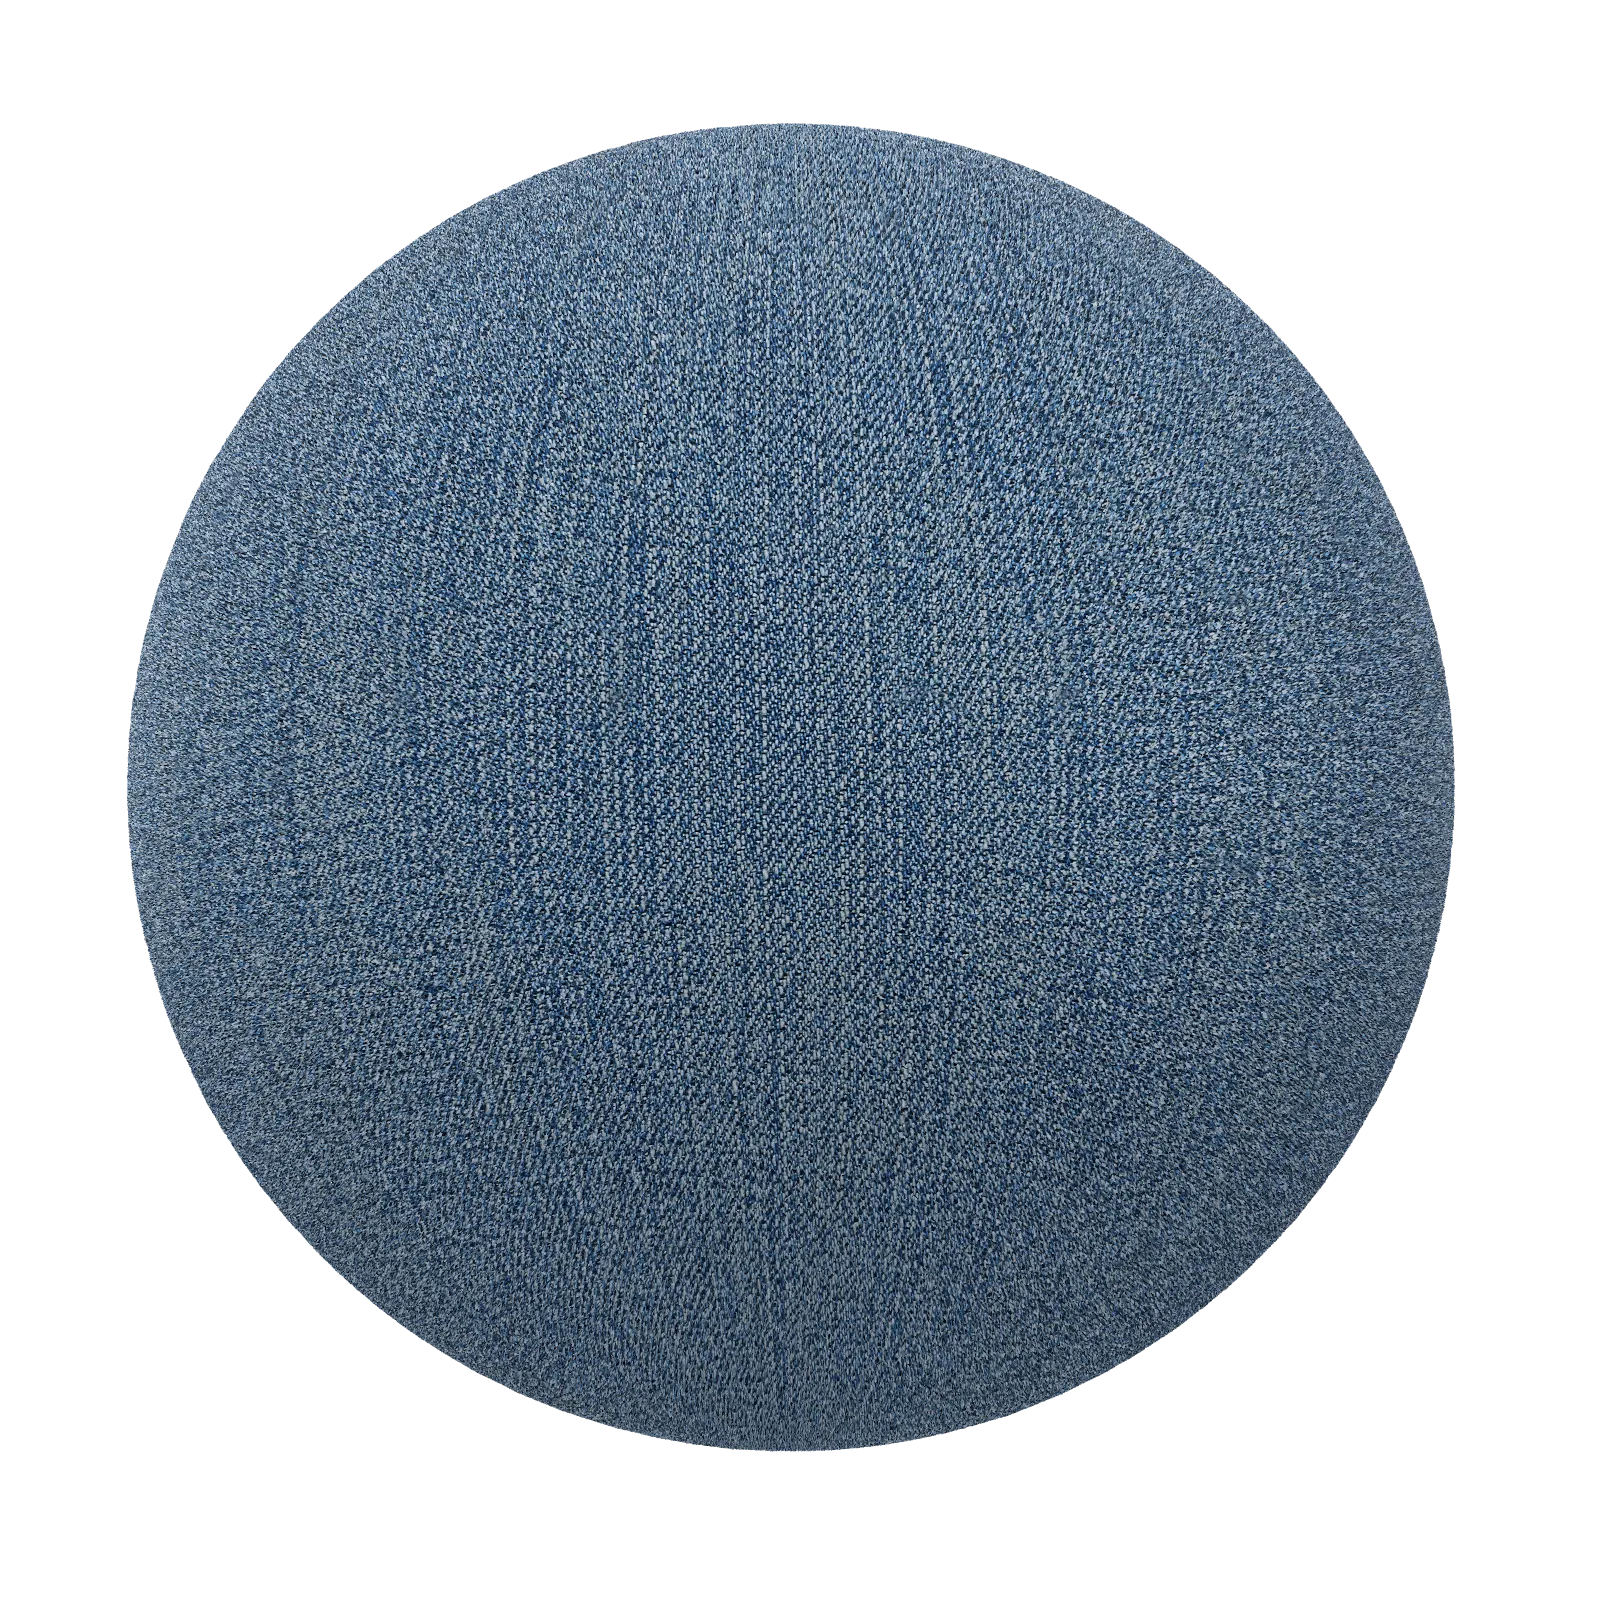 PBR CGAXIS TEXTURES – FABRICS – Blue Fabric 01